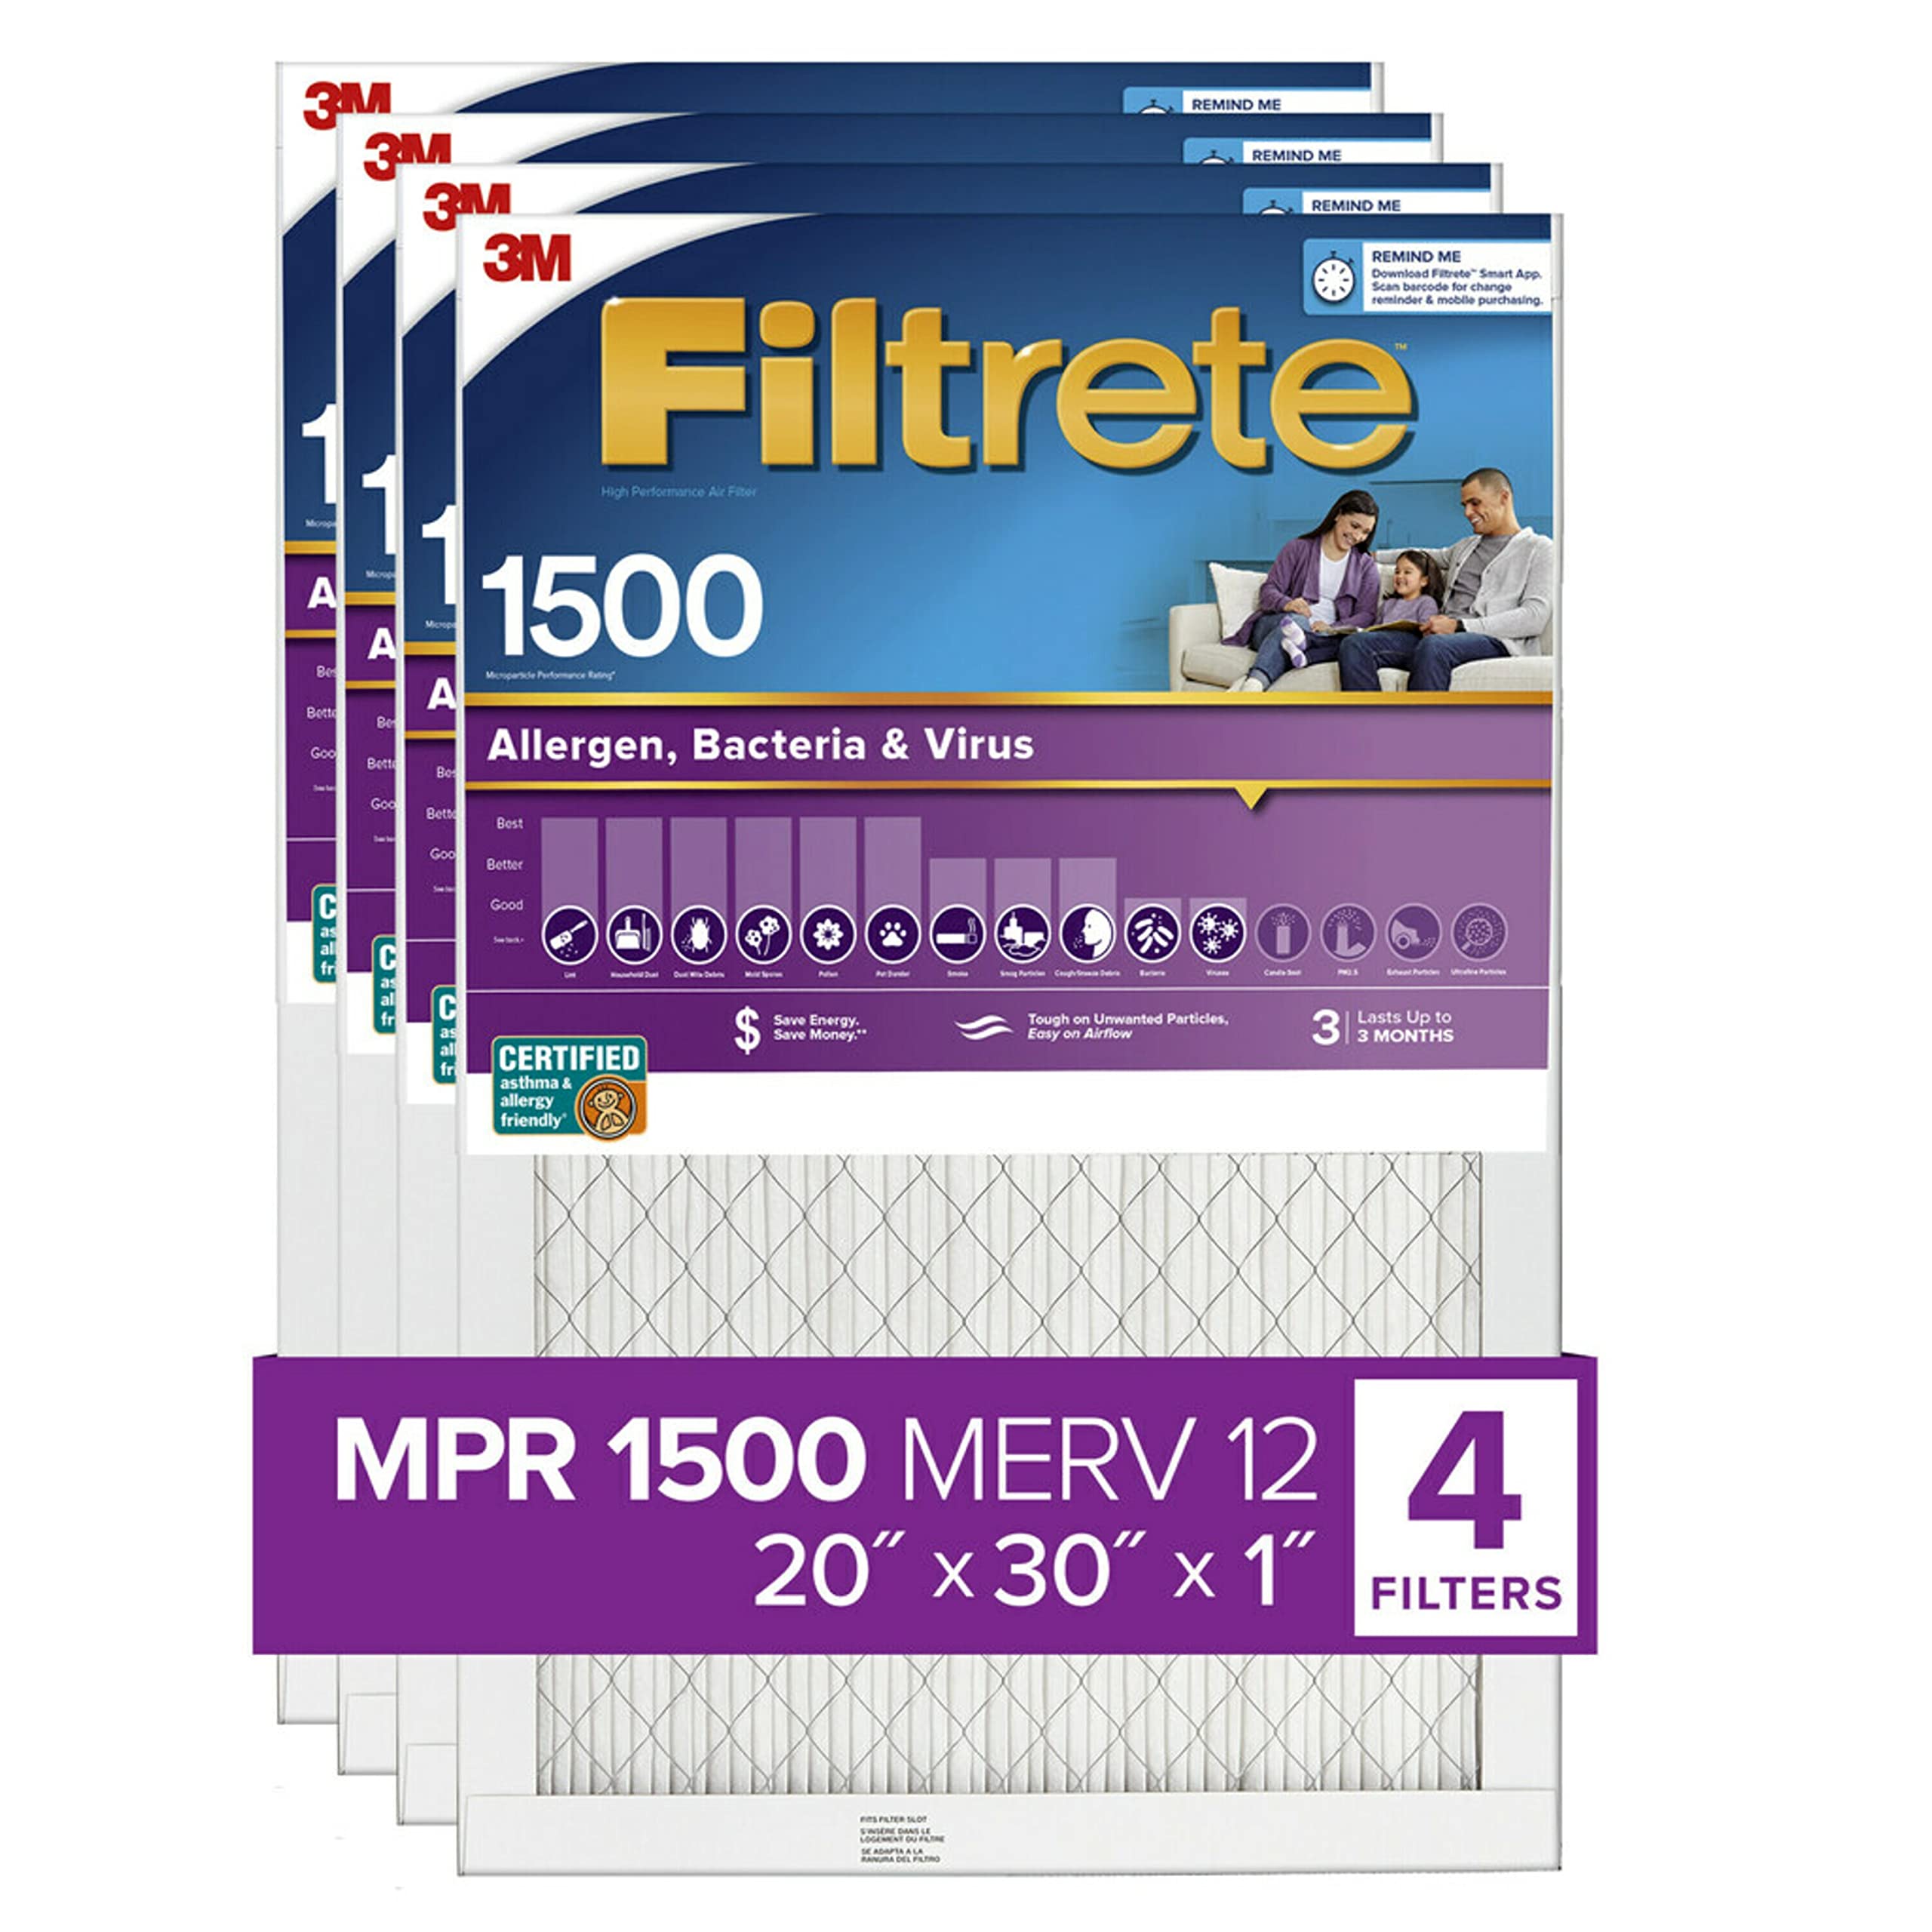 Filtrete 20x30x1 空气过滤器，MPR 1500，MERV 12，健康生活超过敏原 3 个月褶式 1 英寸空气过滤器，4 个过滤器